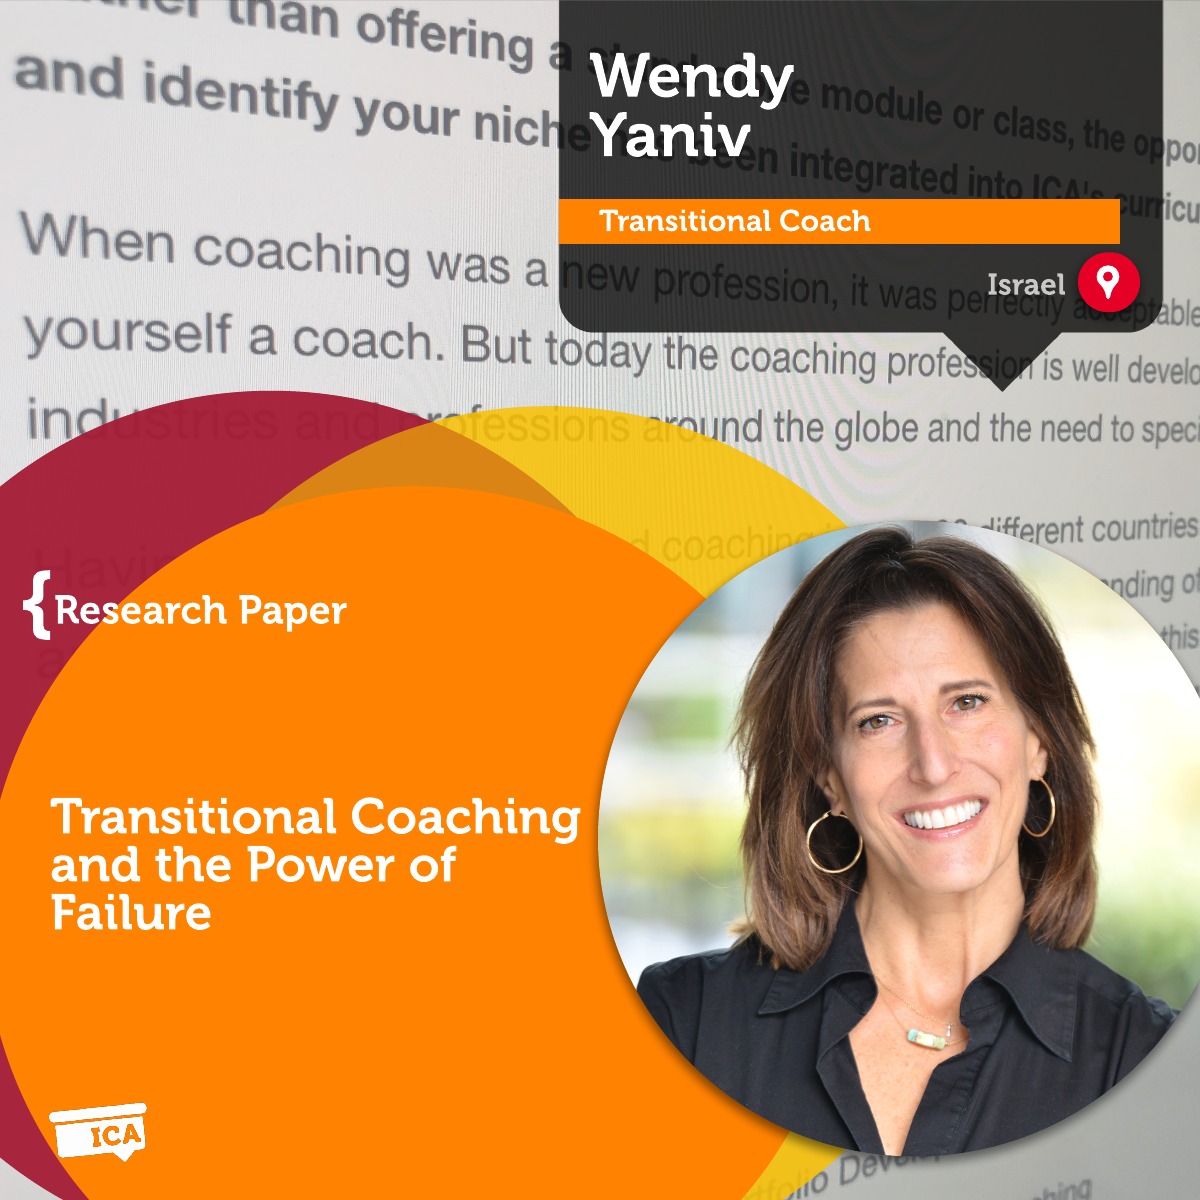 Wendy Yaniv. Coaching Research Paper 1200